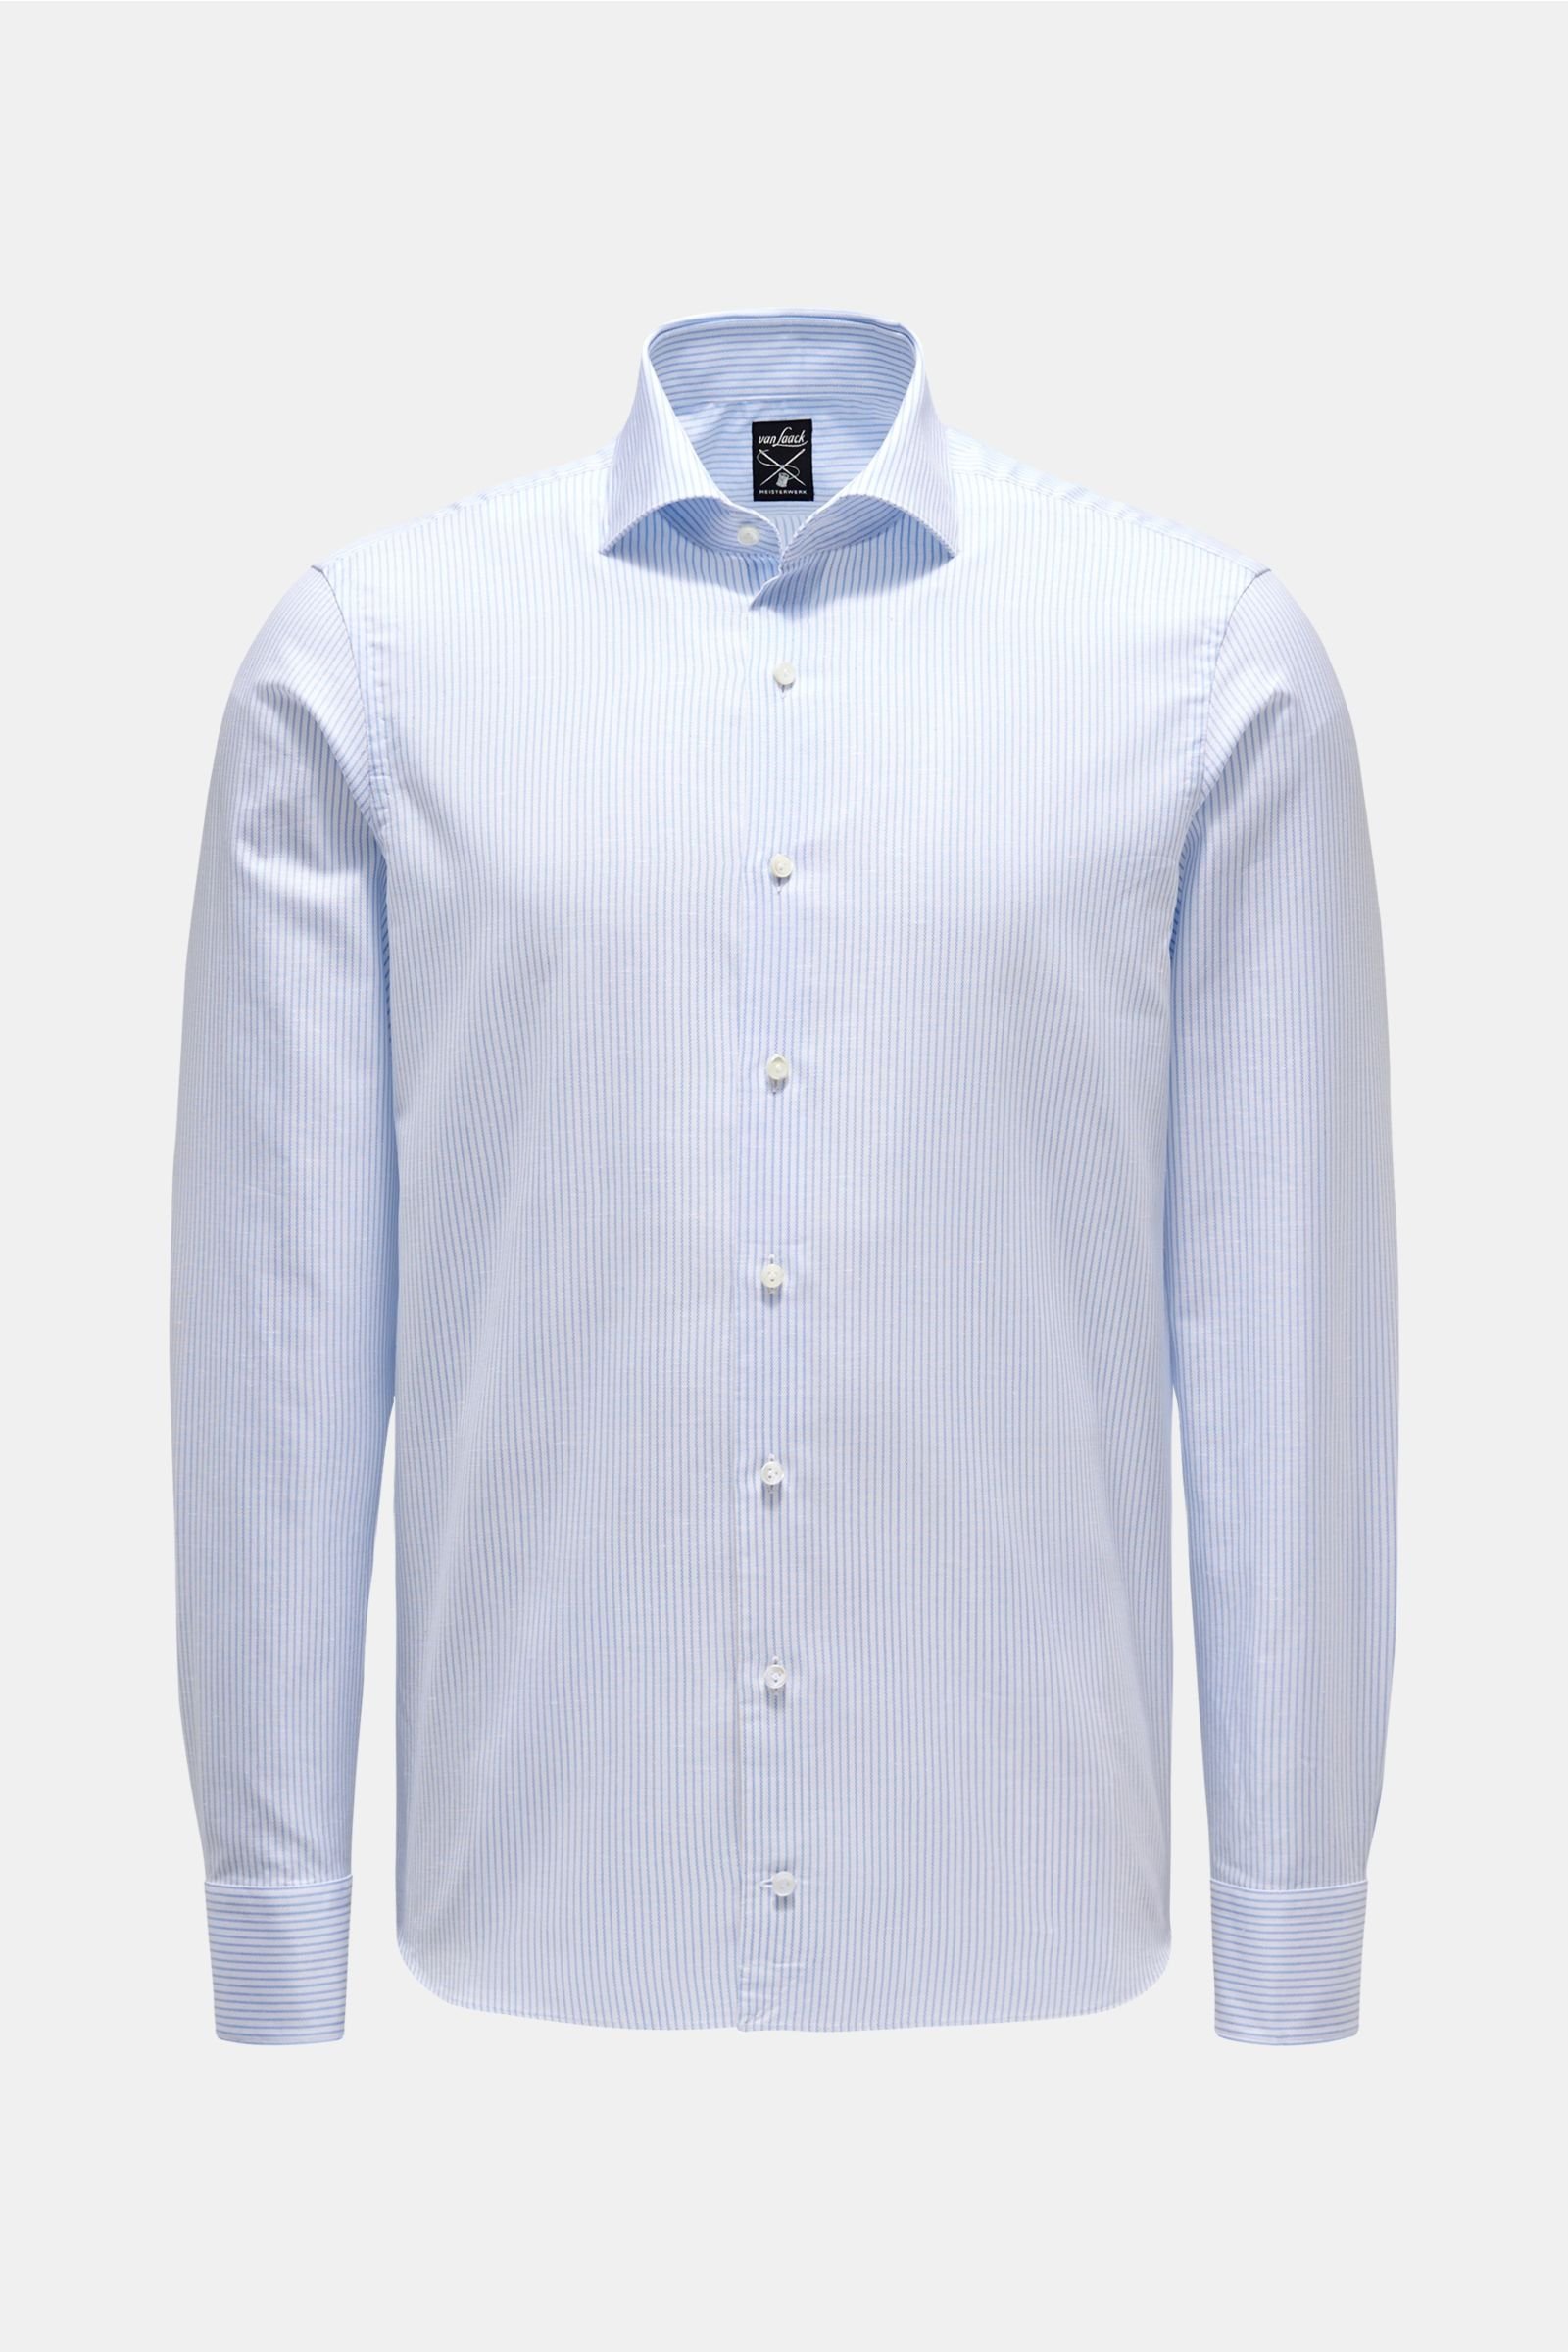 Casual shirt 'Mivara Tailor Fit' shark collar light blue/white striped